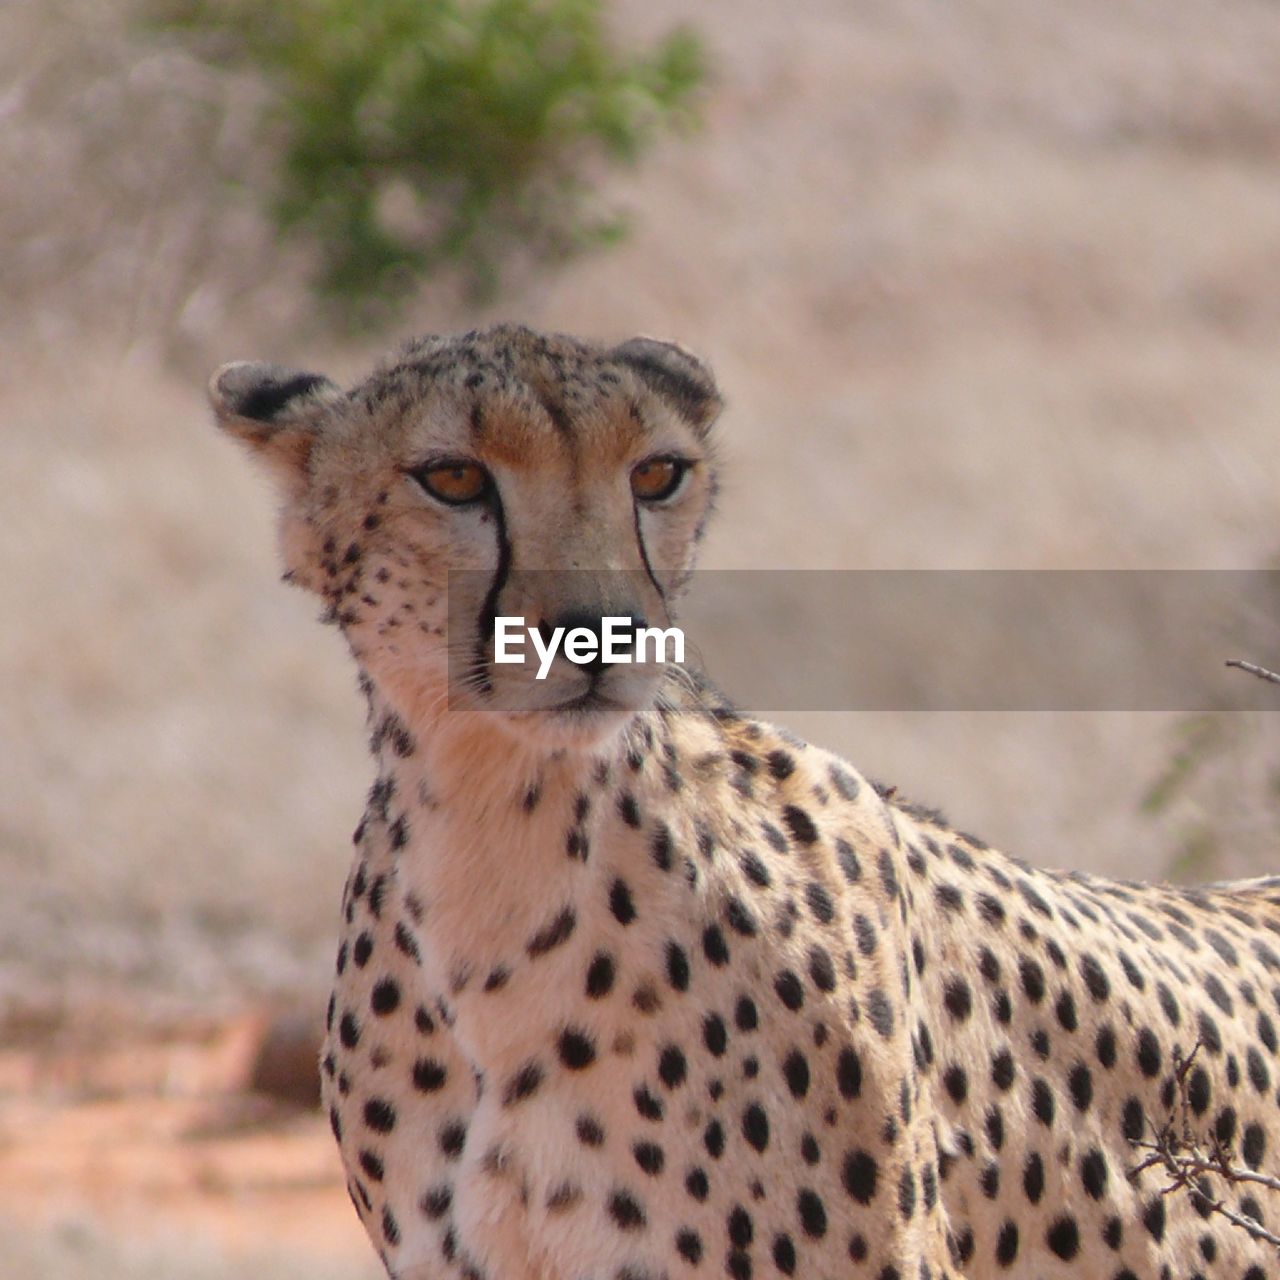 Cheetah on field looking away